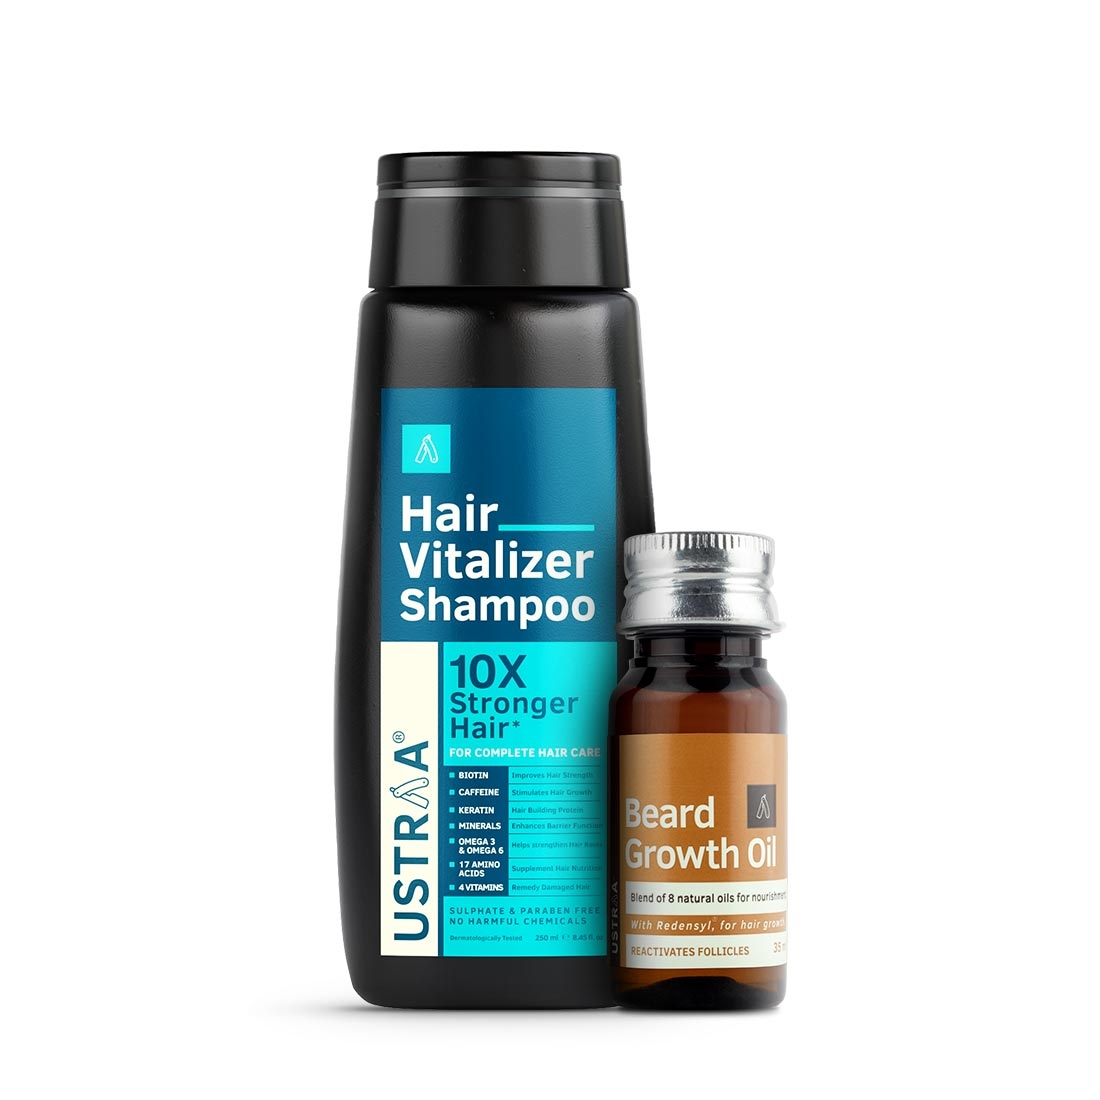 Ustraa | Ustraa Hair Vitalizer Shampoo - 250ml & Beard growth Oil - 35ml